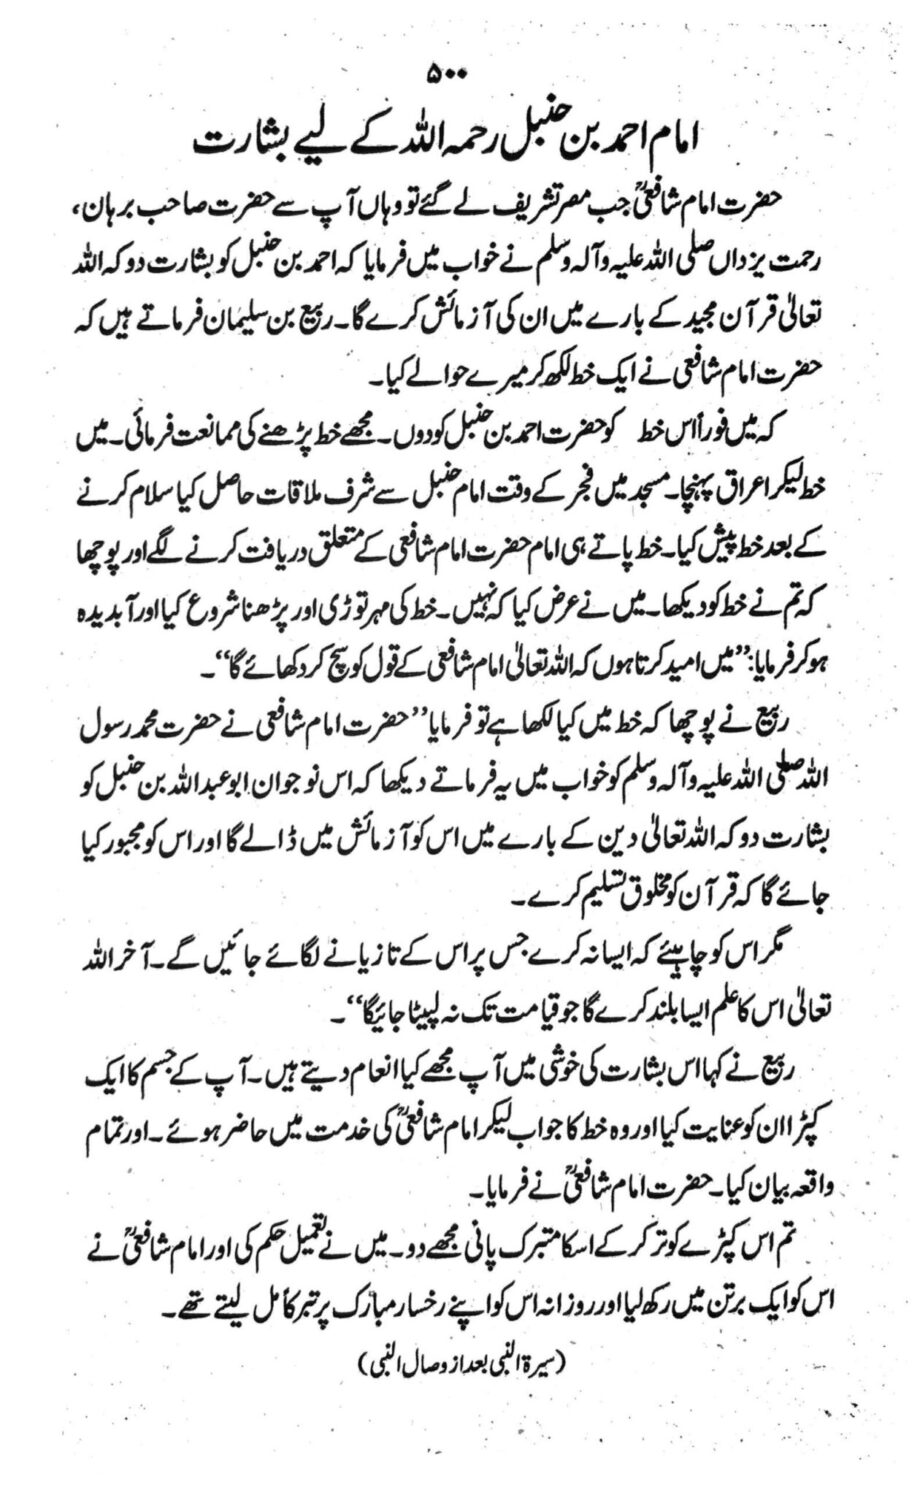 Moral stories and waqiat in urdu